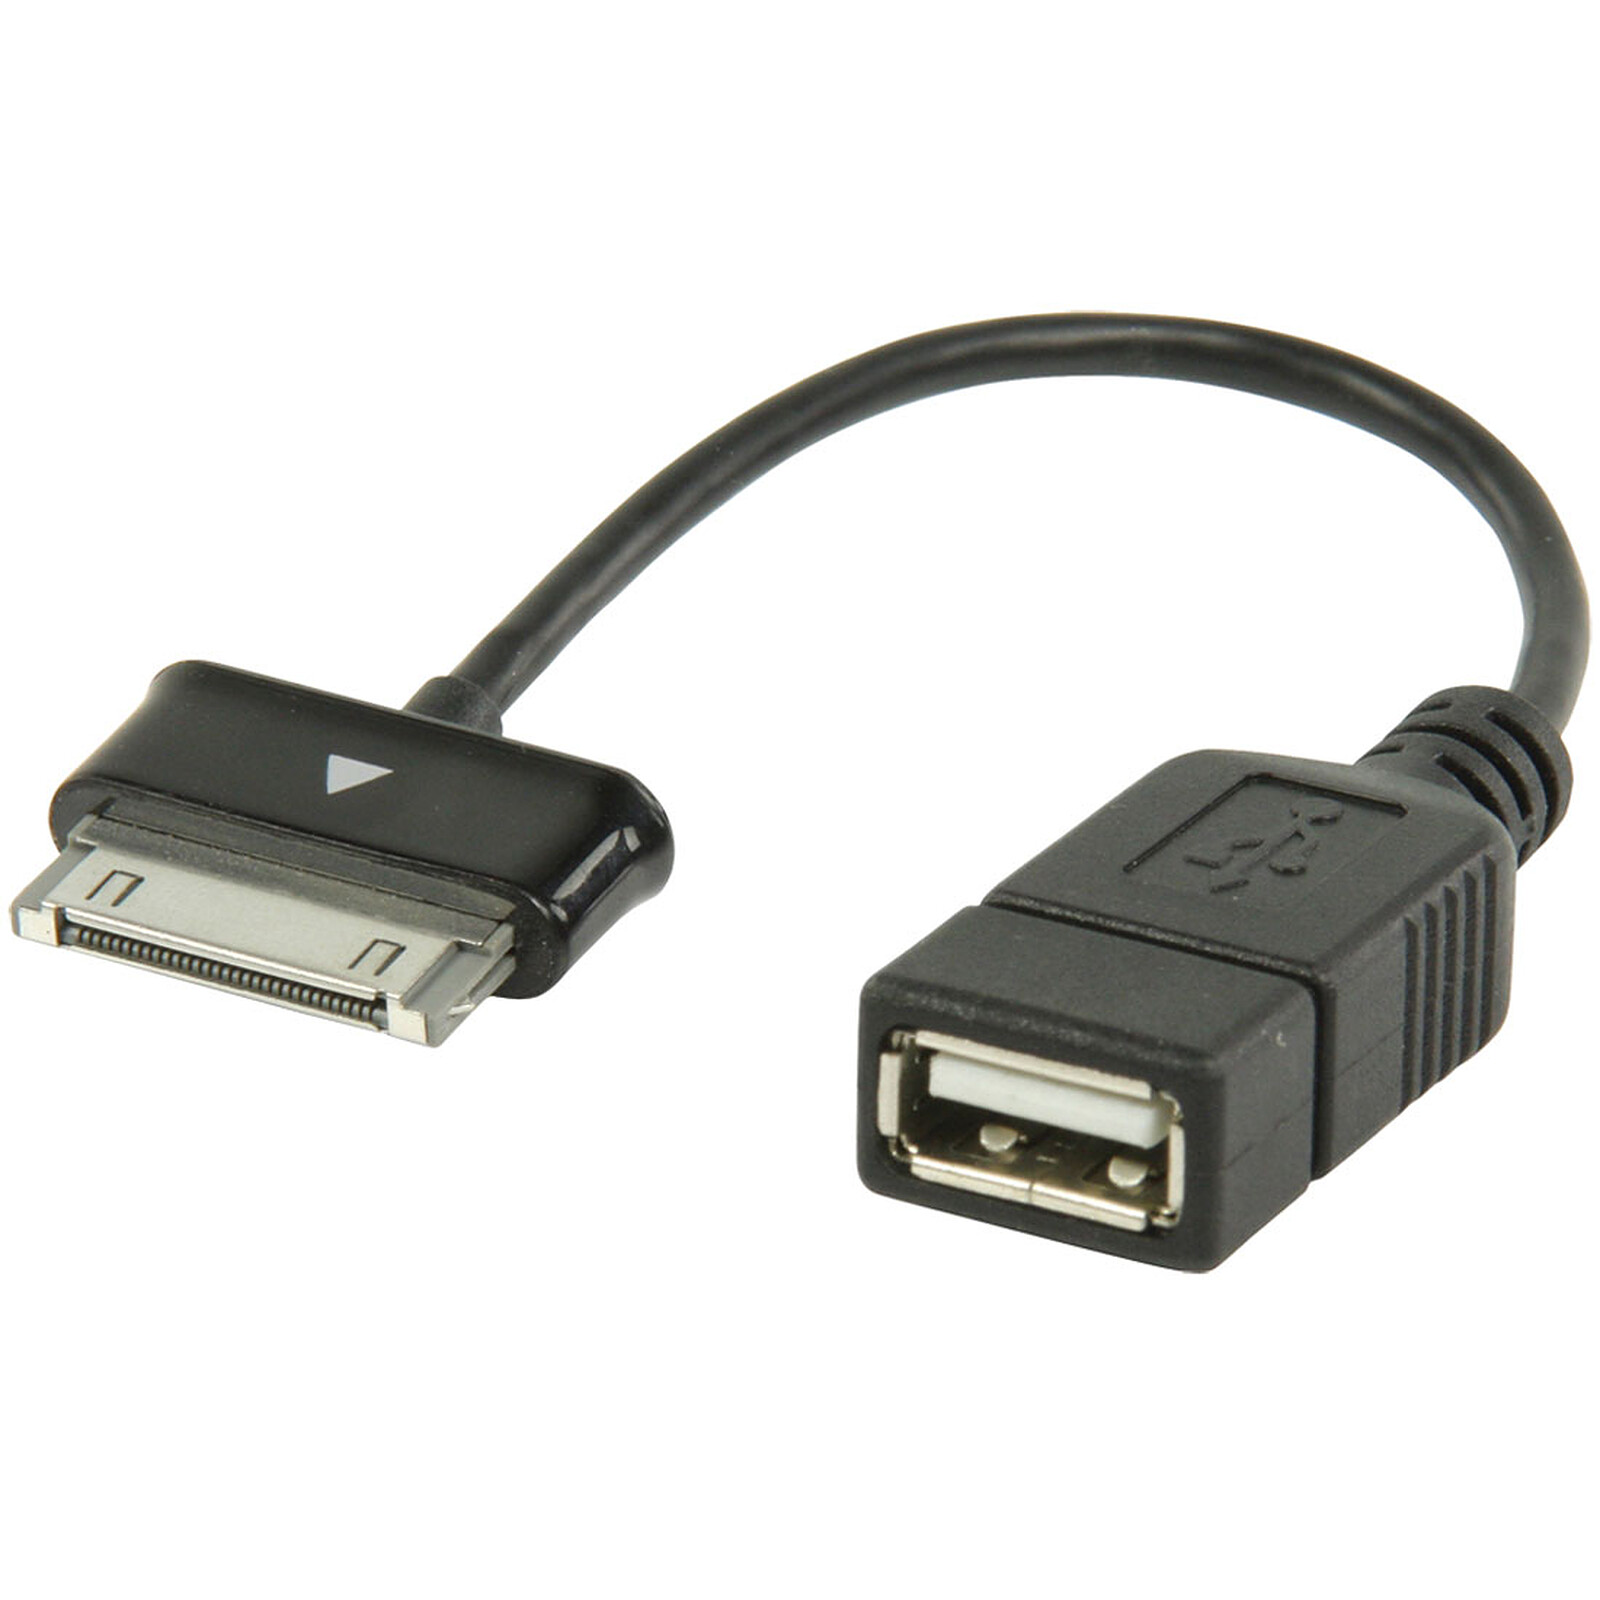 USB 2.0 OTG On-The-Go female to Samsung pin - USB - LDLC 3-year warranty | Moley